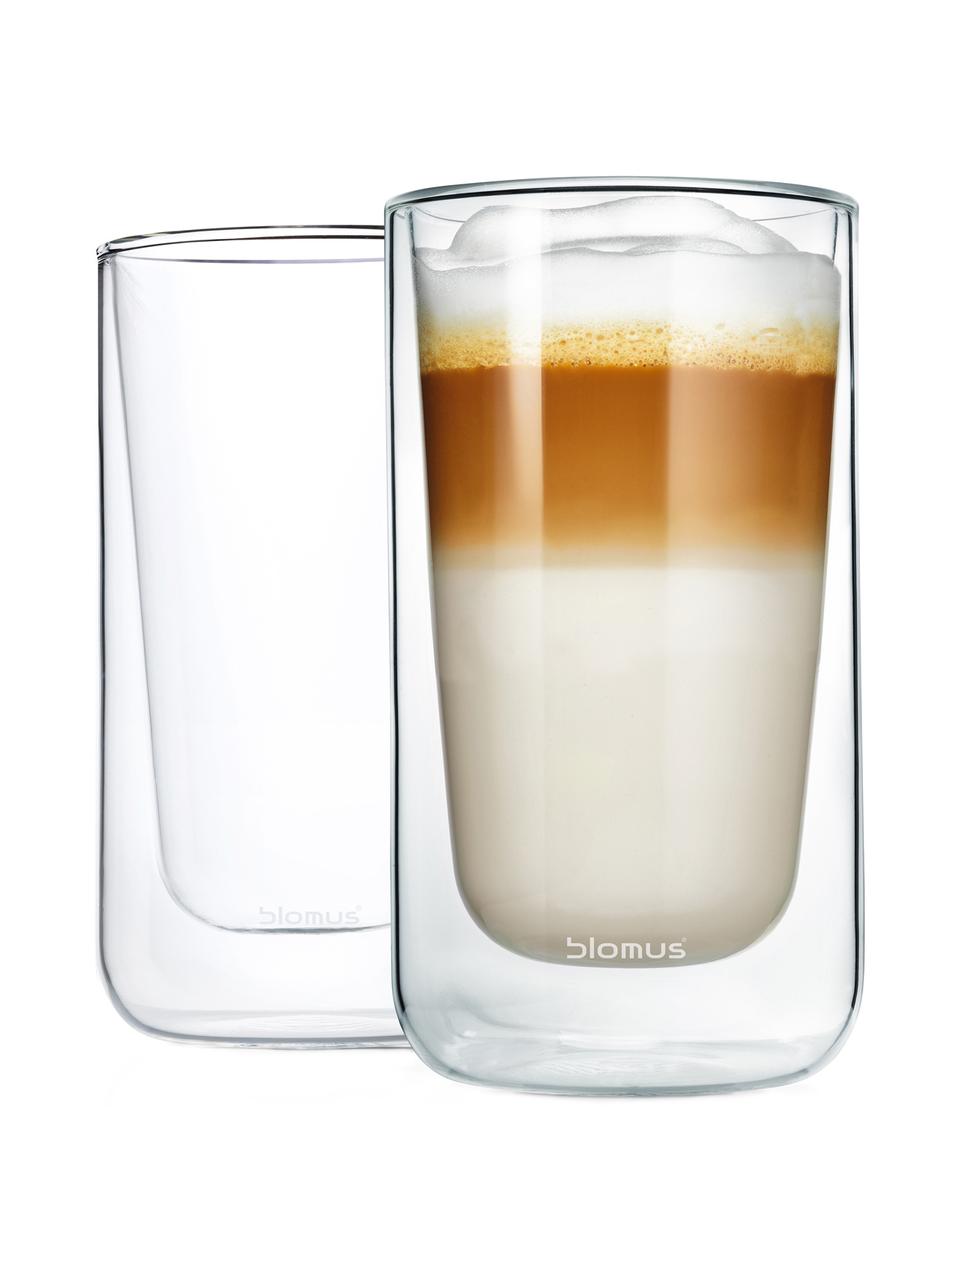 Dubbelwandige koffieglazen Nero, 2 stuks, Glas, Transparant, Ø 8 x H 14 cm, 320 ml